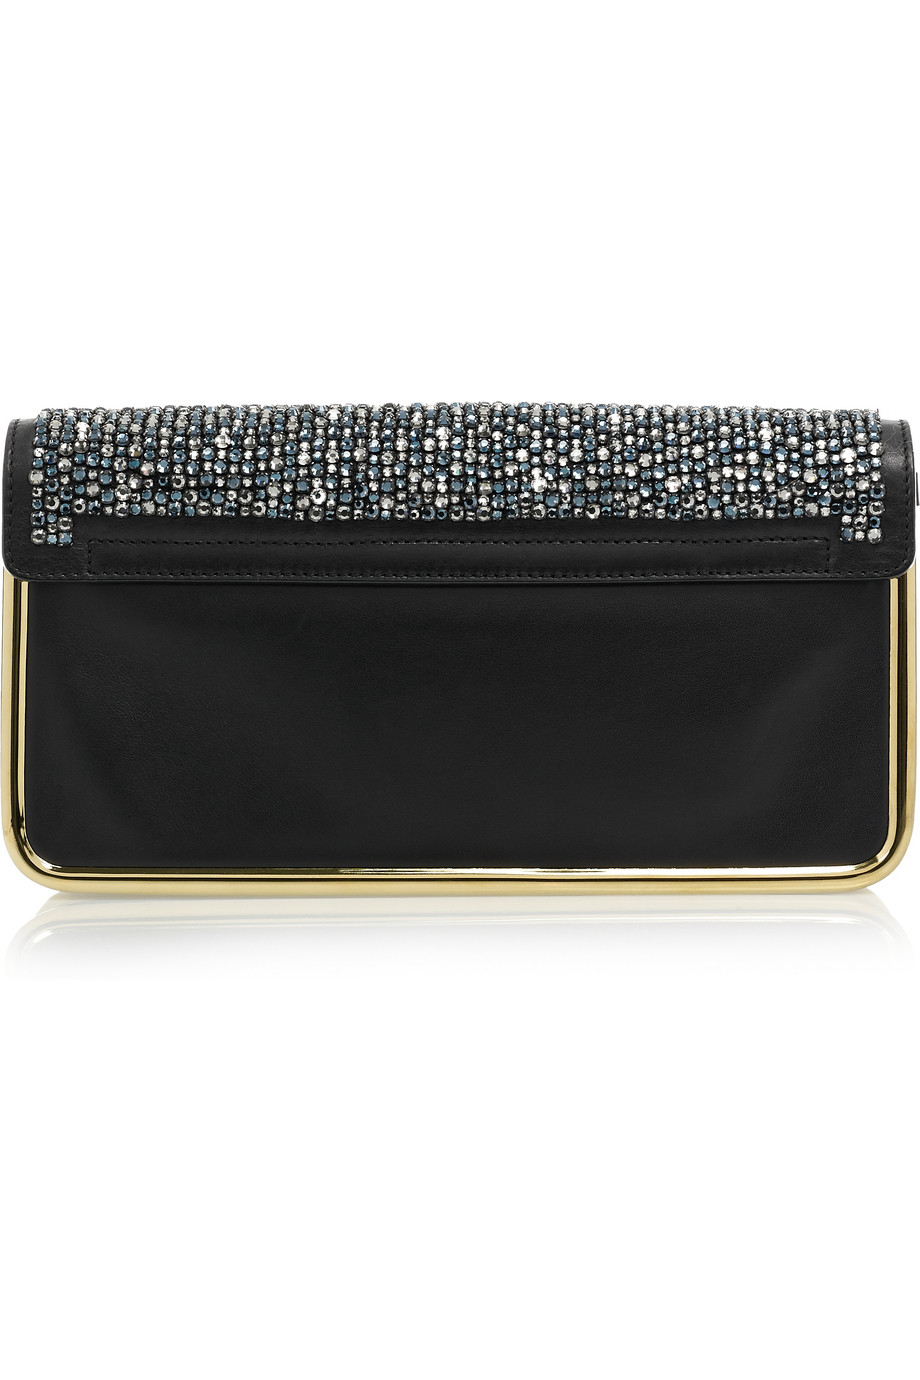 Lyst - Chloé Sally Swarovski Crystal-Embellished Leather Clutch in Black